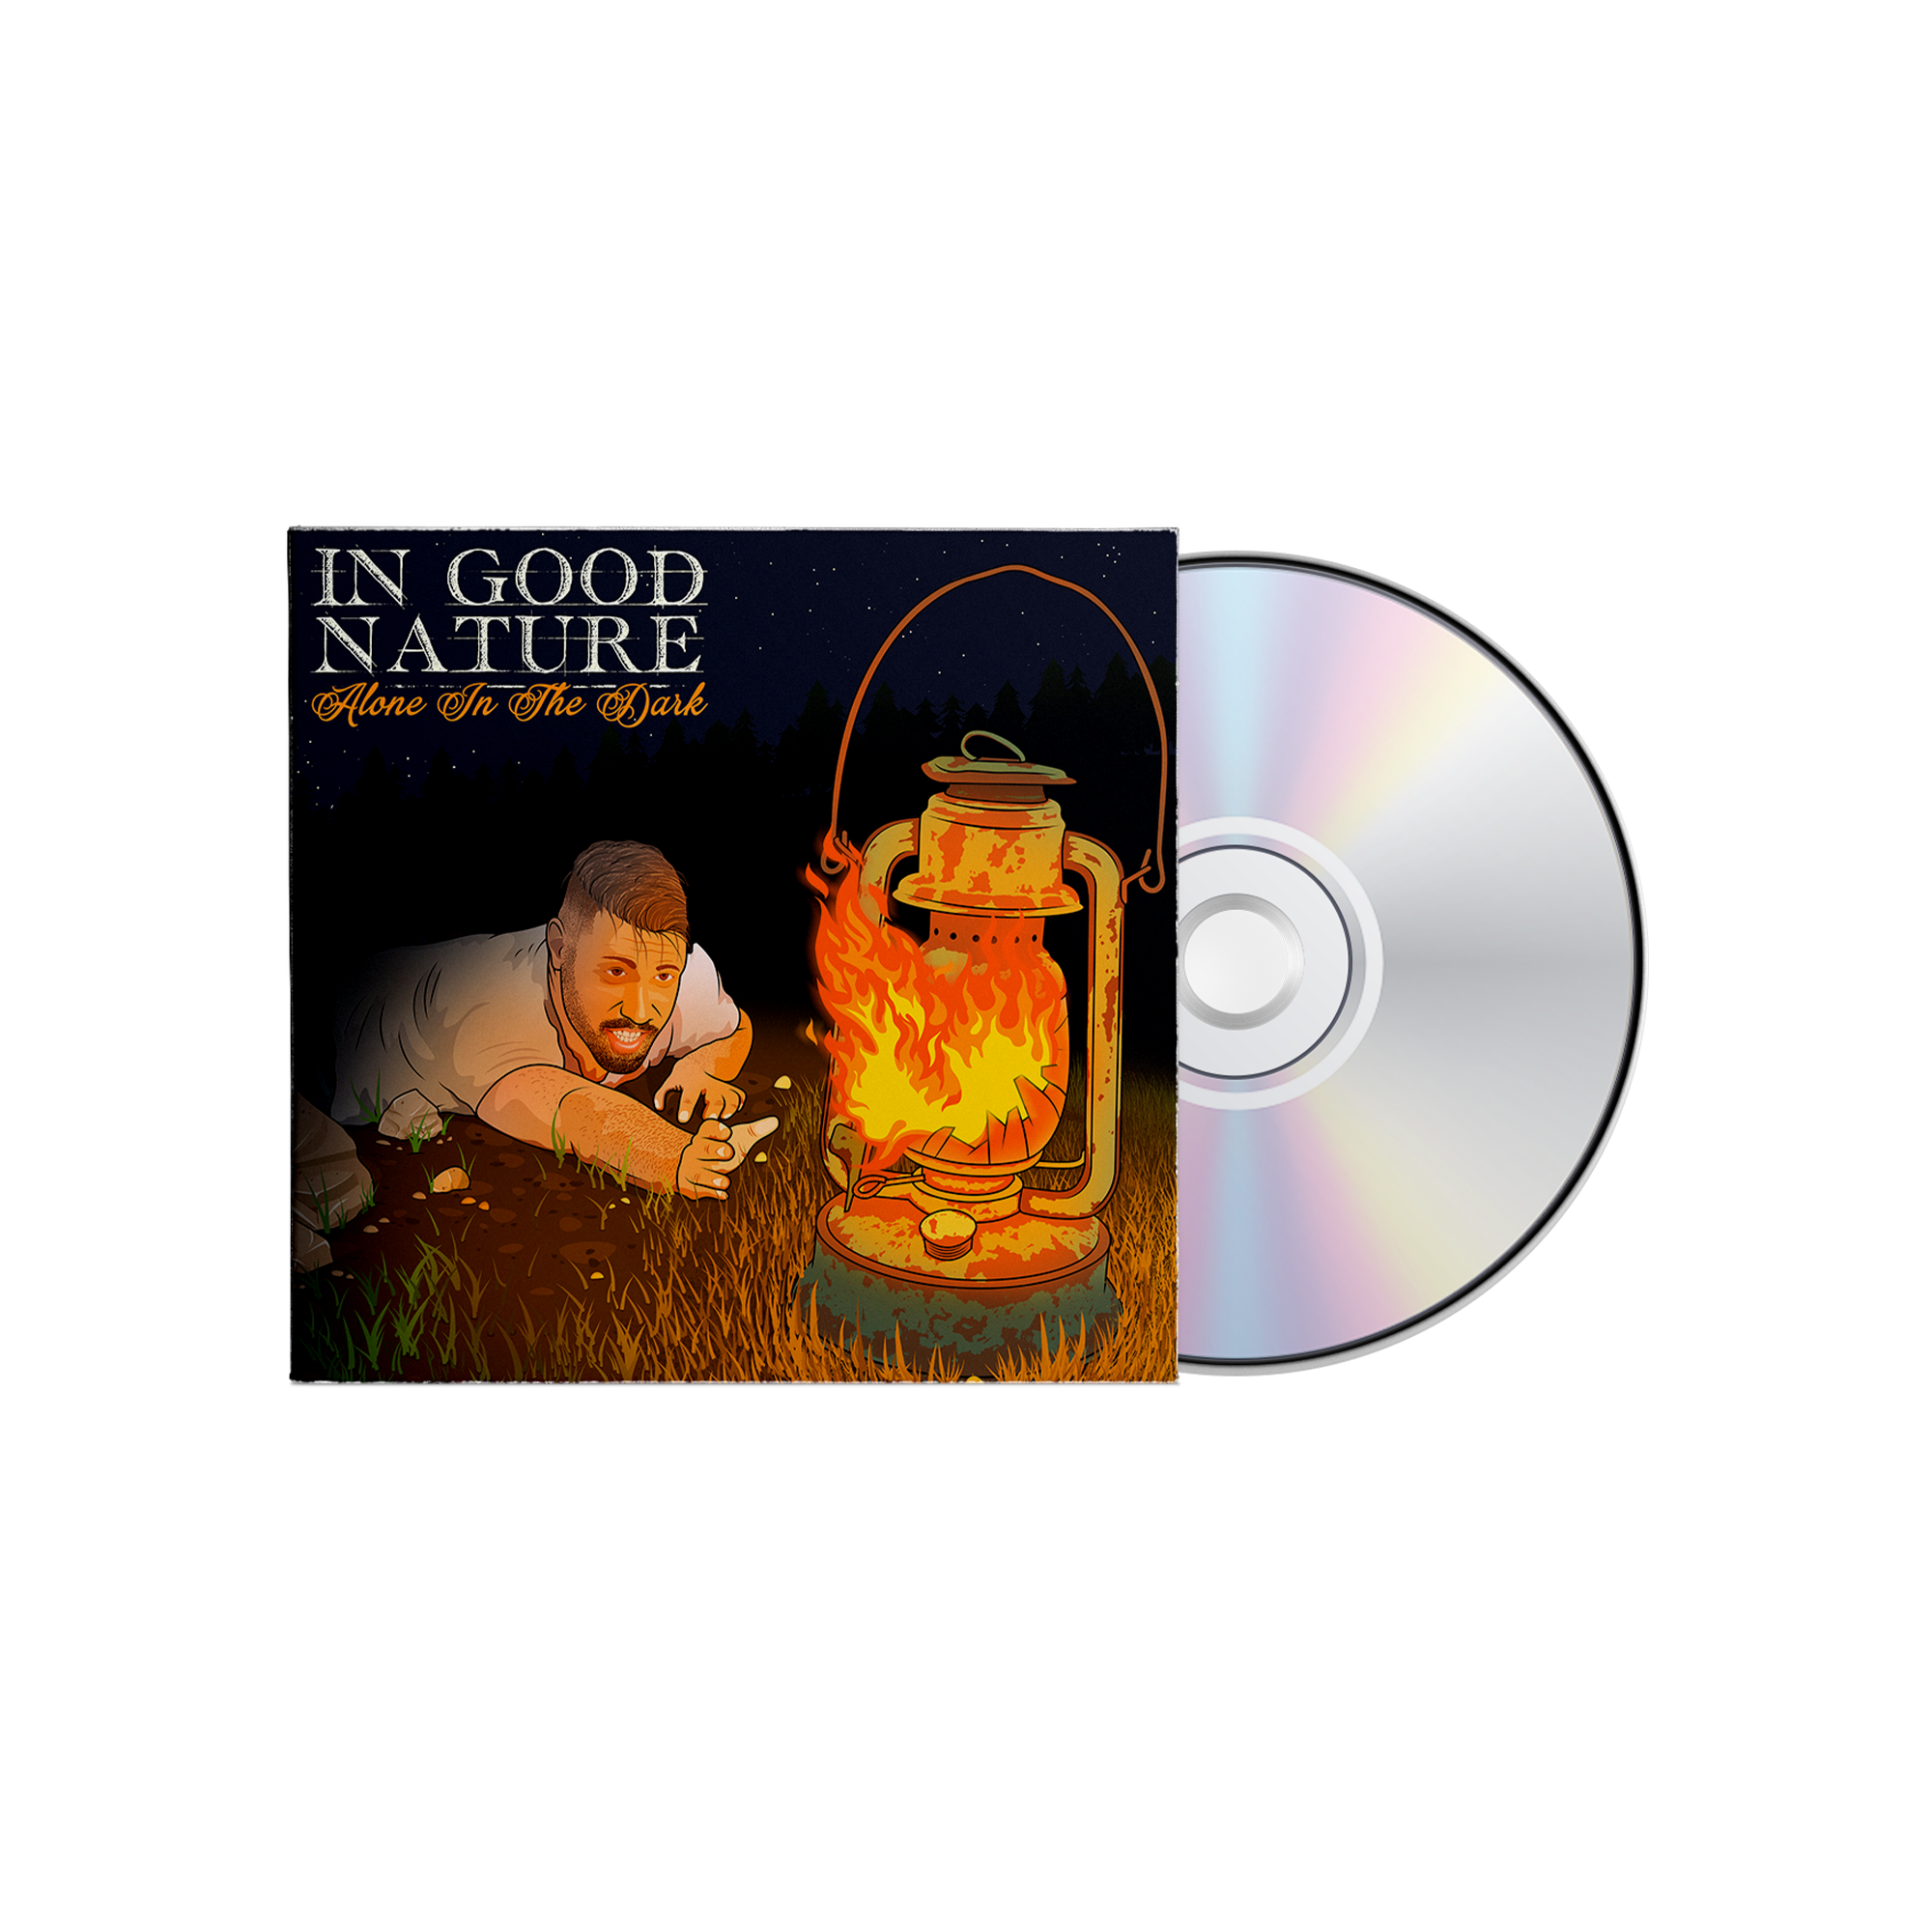 In Good Nature - Alone In The Dark CD + Digital Download